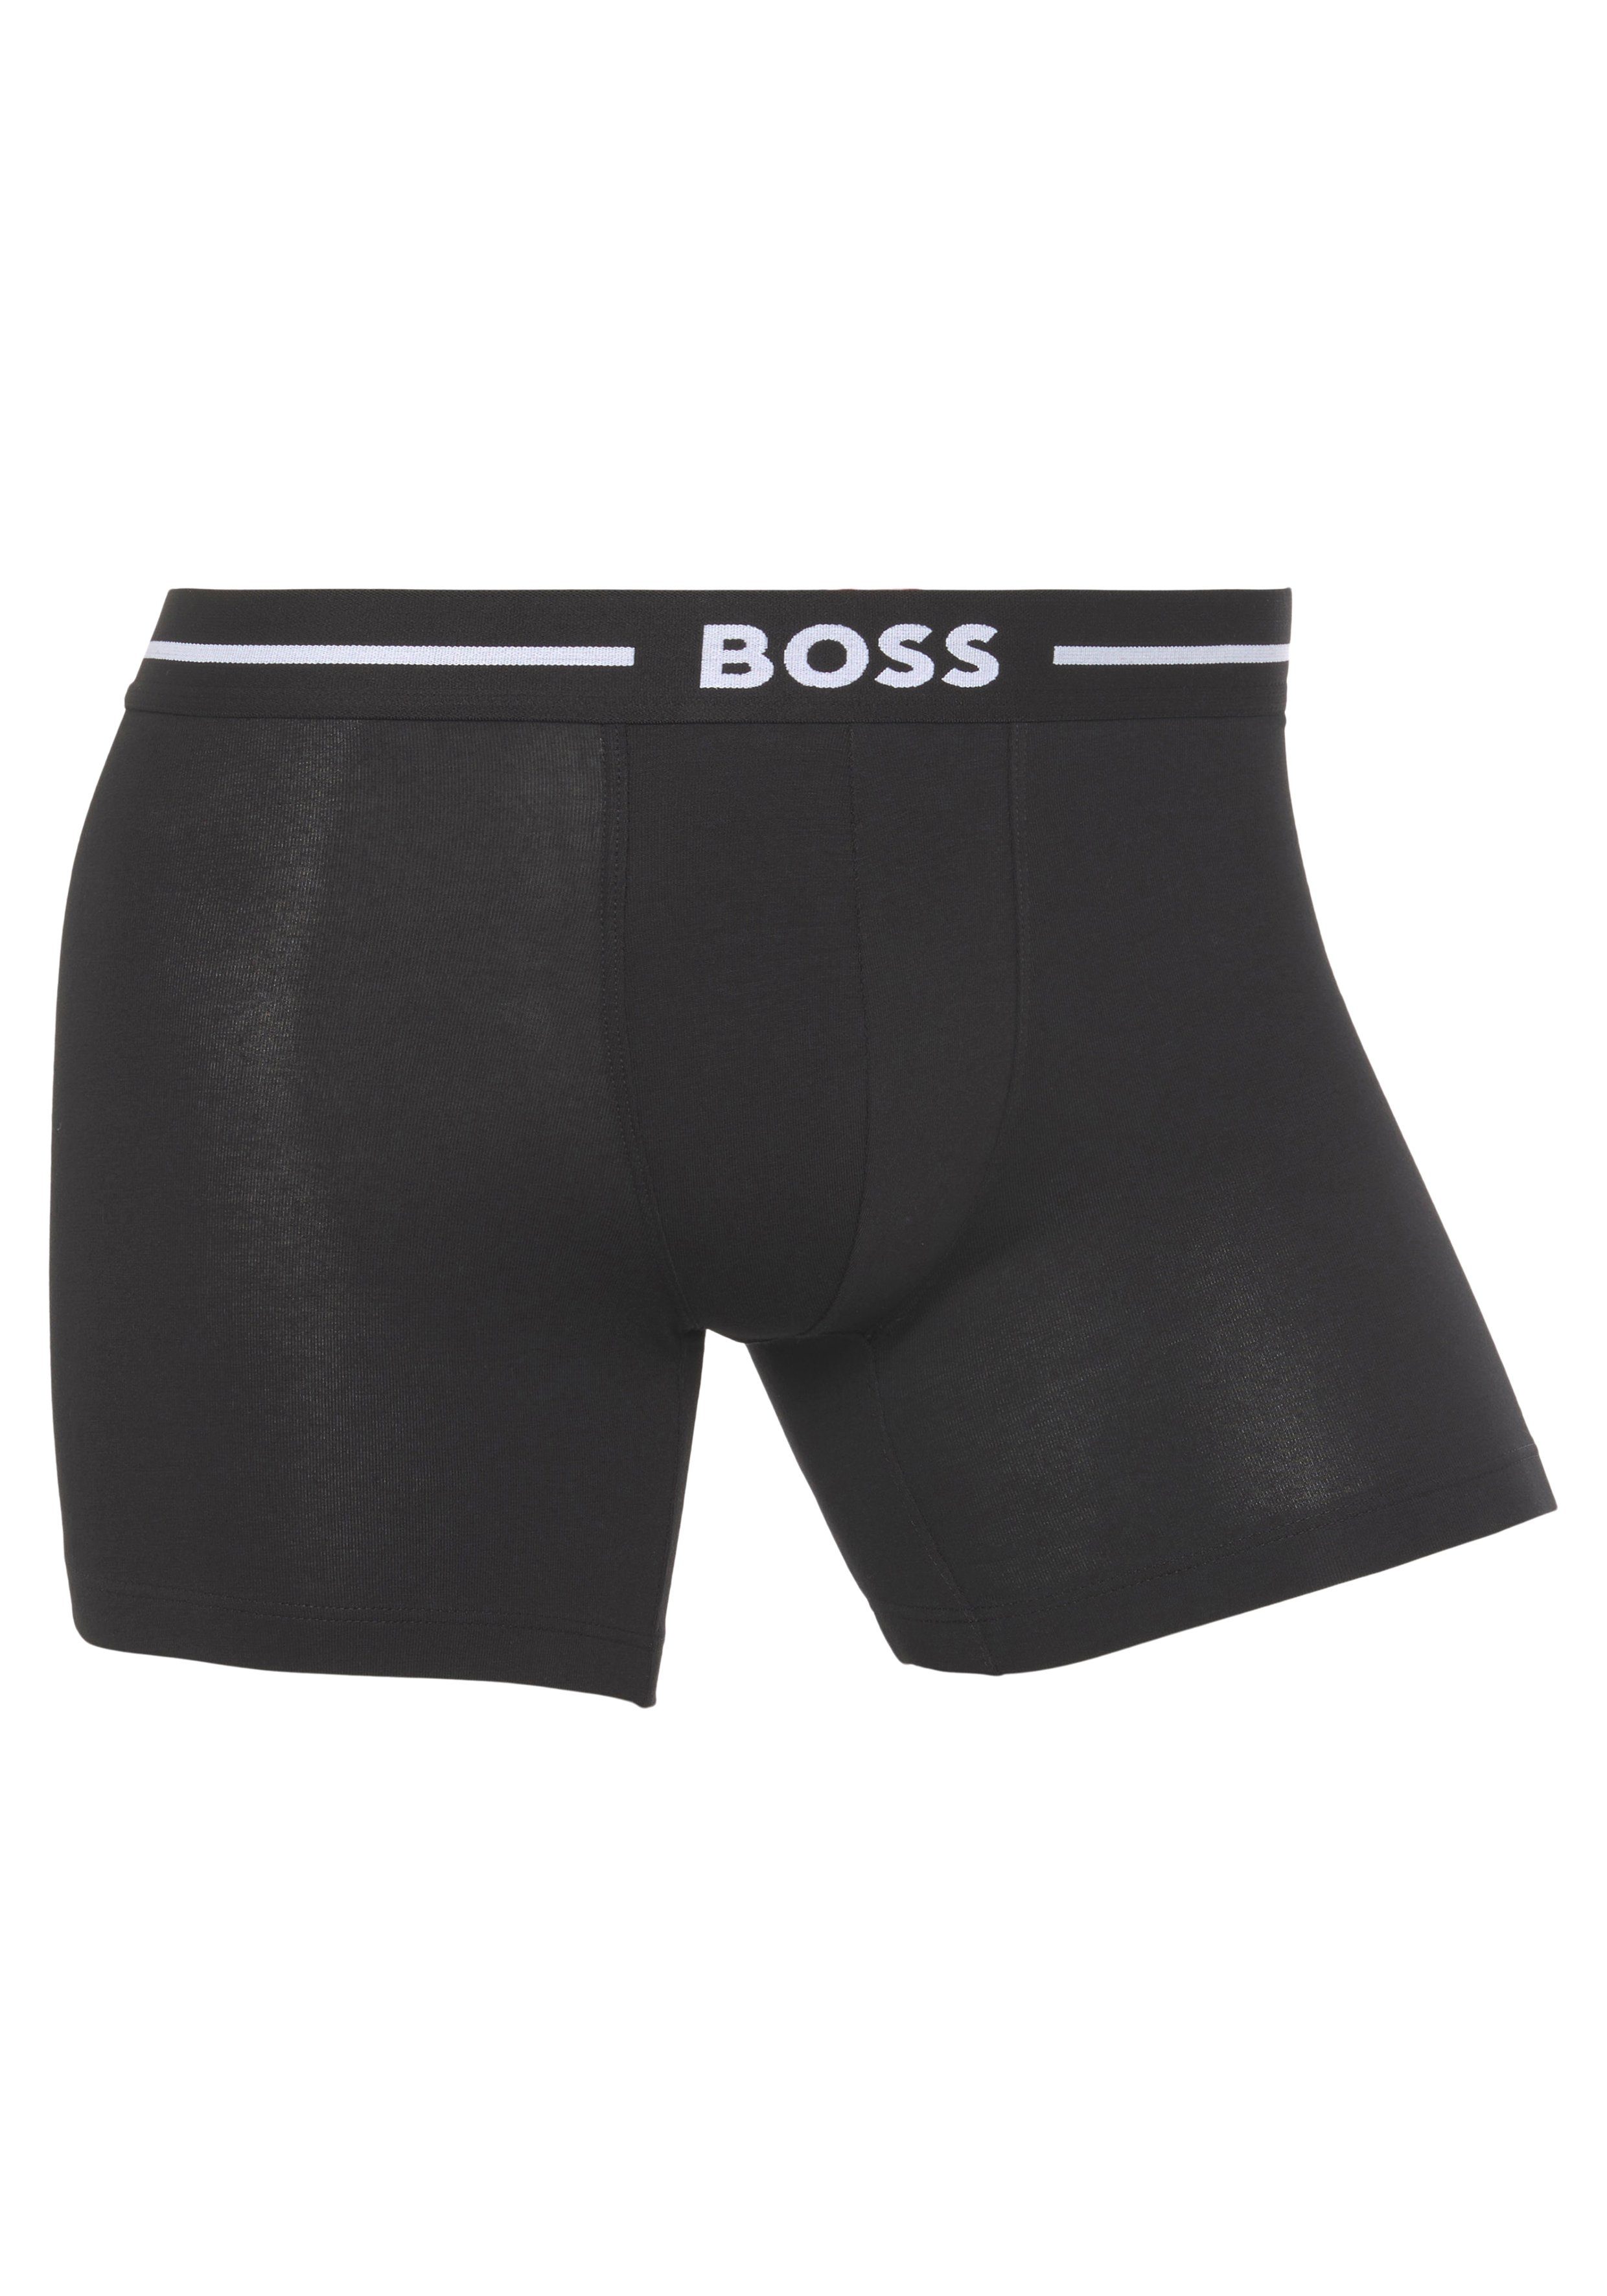 Br Schwarz/Khaki am Bold BOSS Logoschriftzug mit Boxershorts Bund 3P (Packung, 3er)